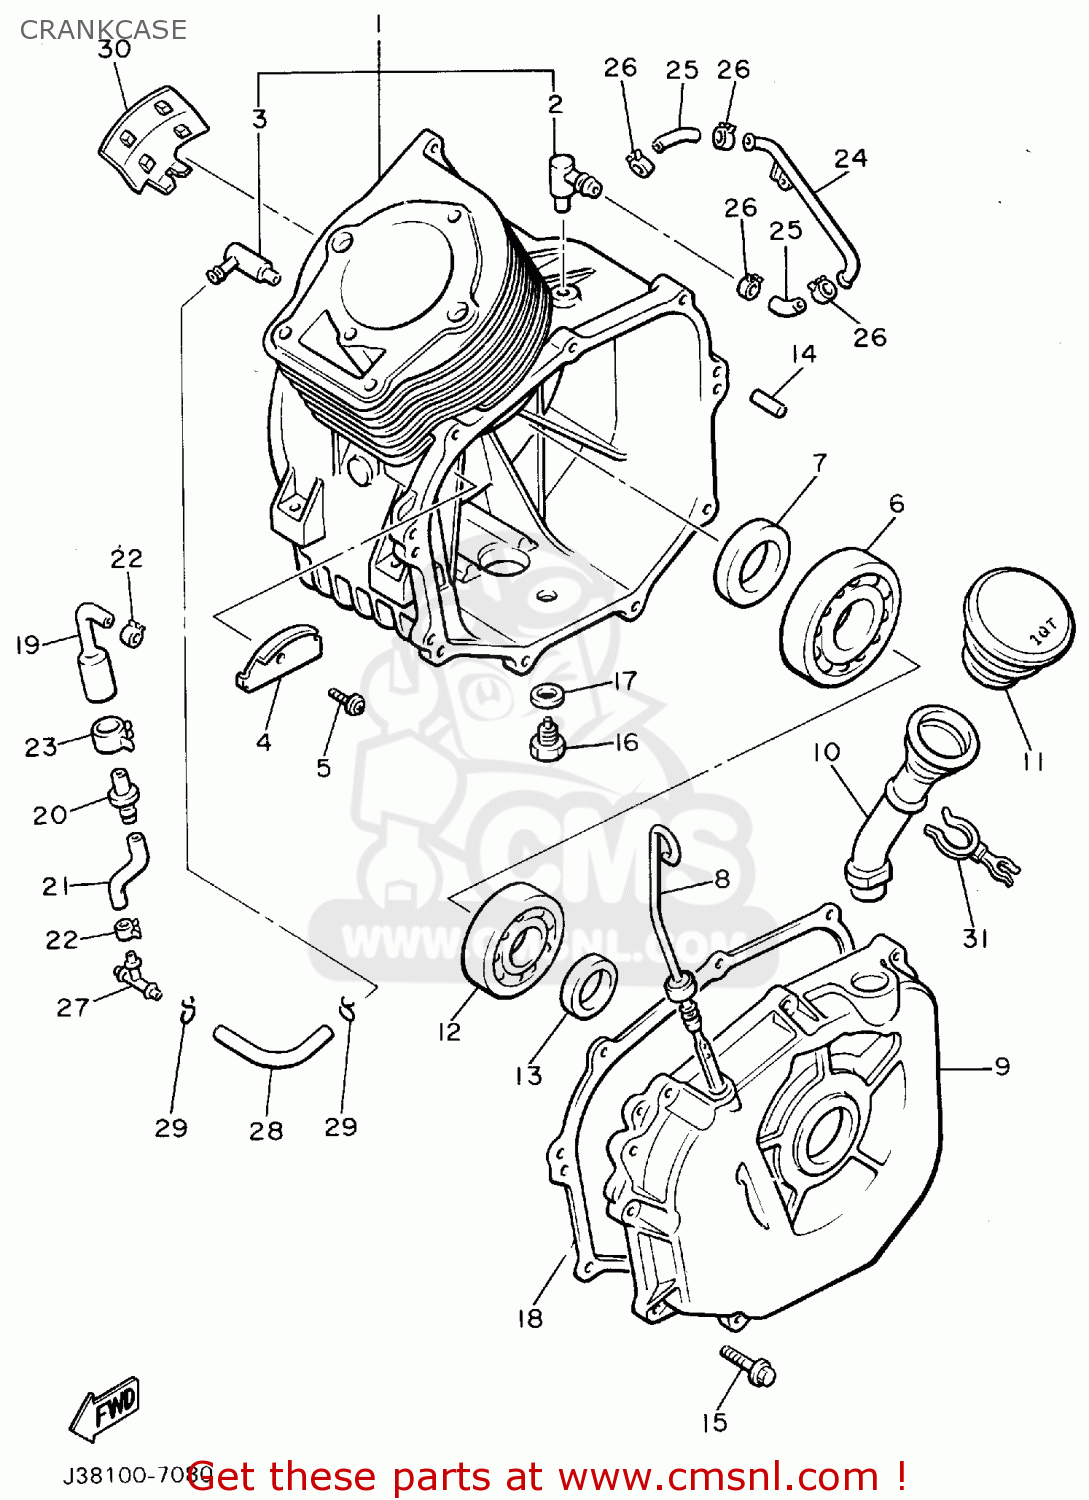 Diagram Wiring Diagram For Yamaha G16 Golf Cart Full Version Hd Quality Golf Cart Ideadiagrams Saporite It